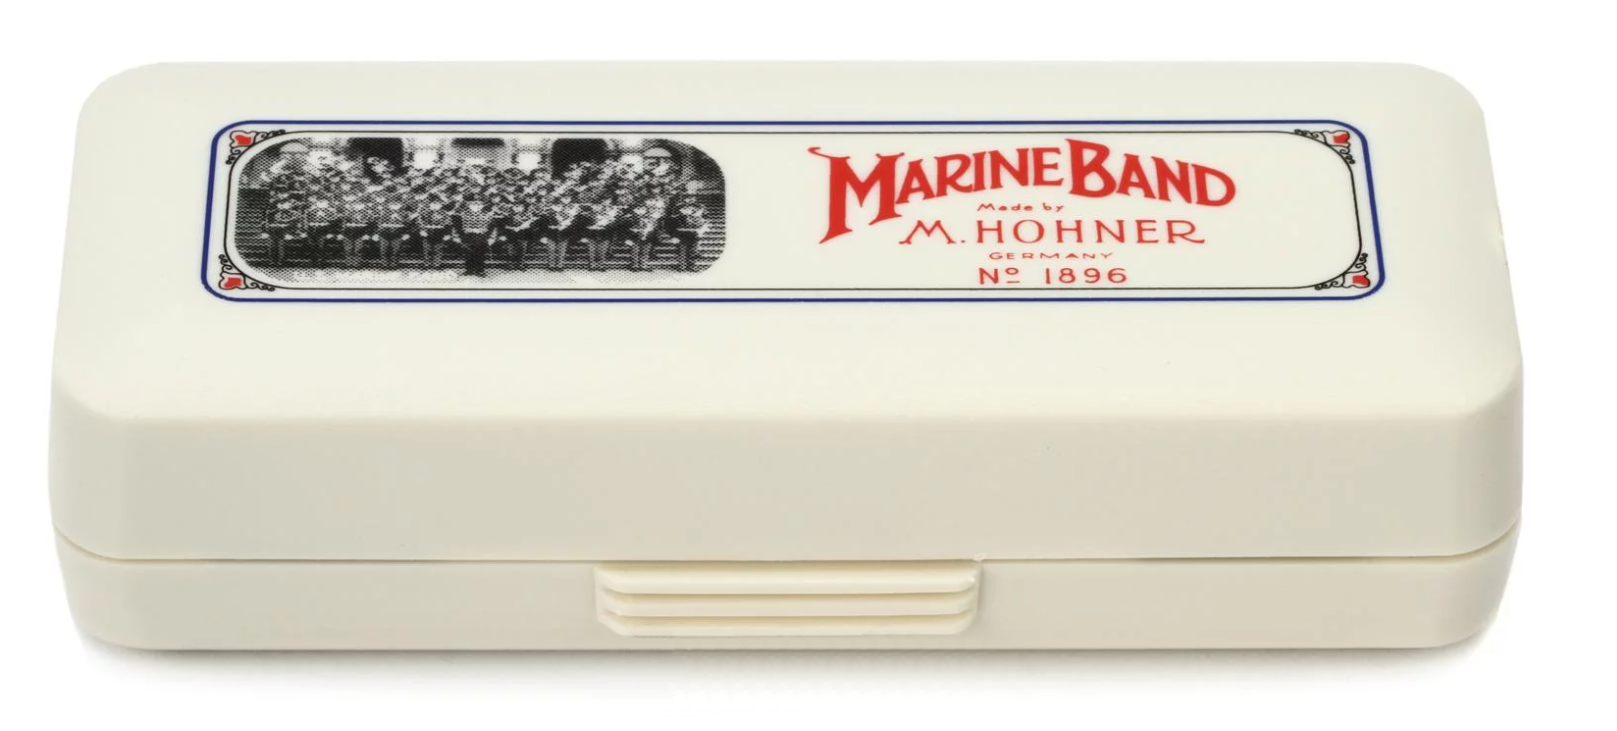 HOHNER  Diatonic Harmonica, Marine Band 1896 - Key of D